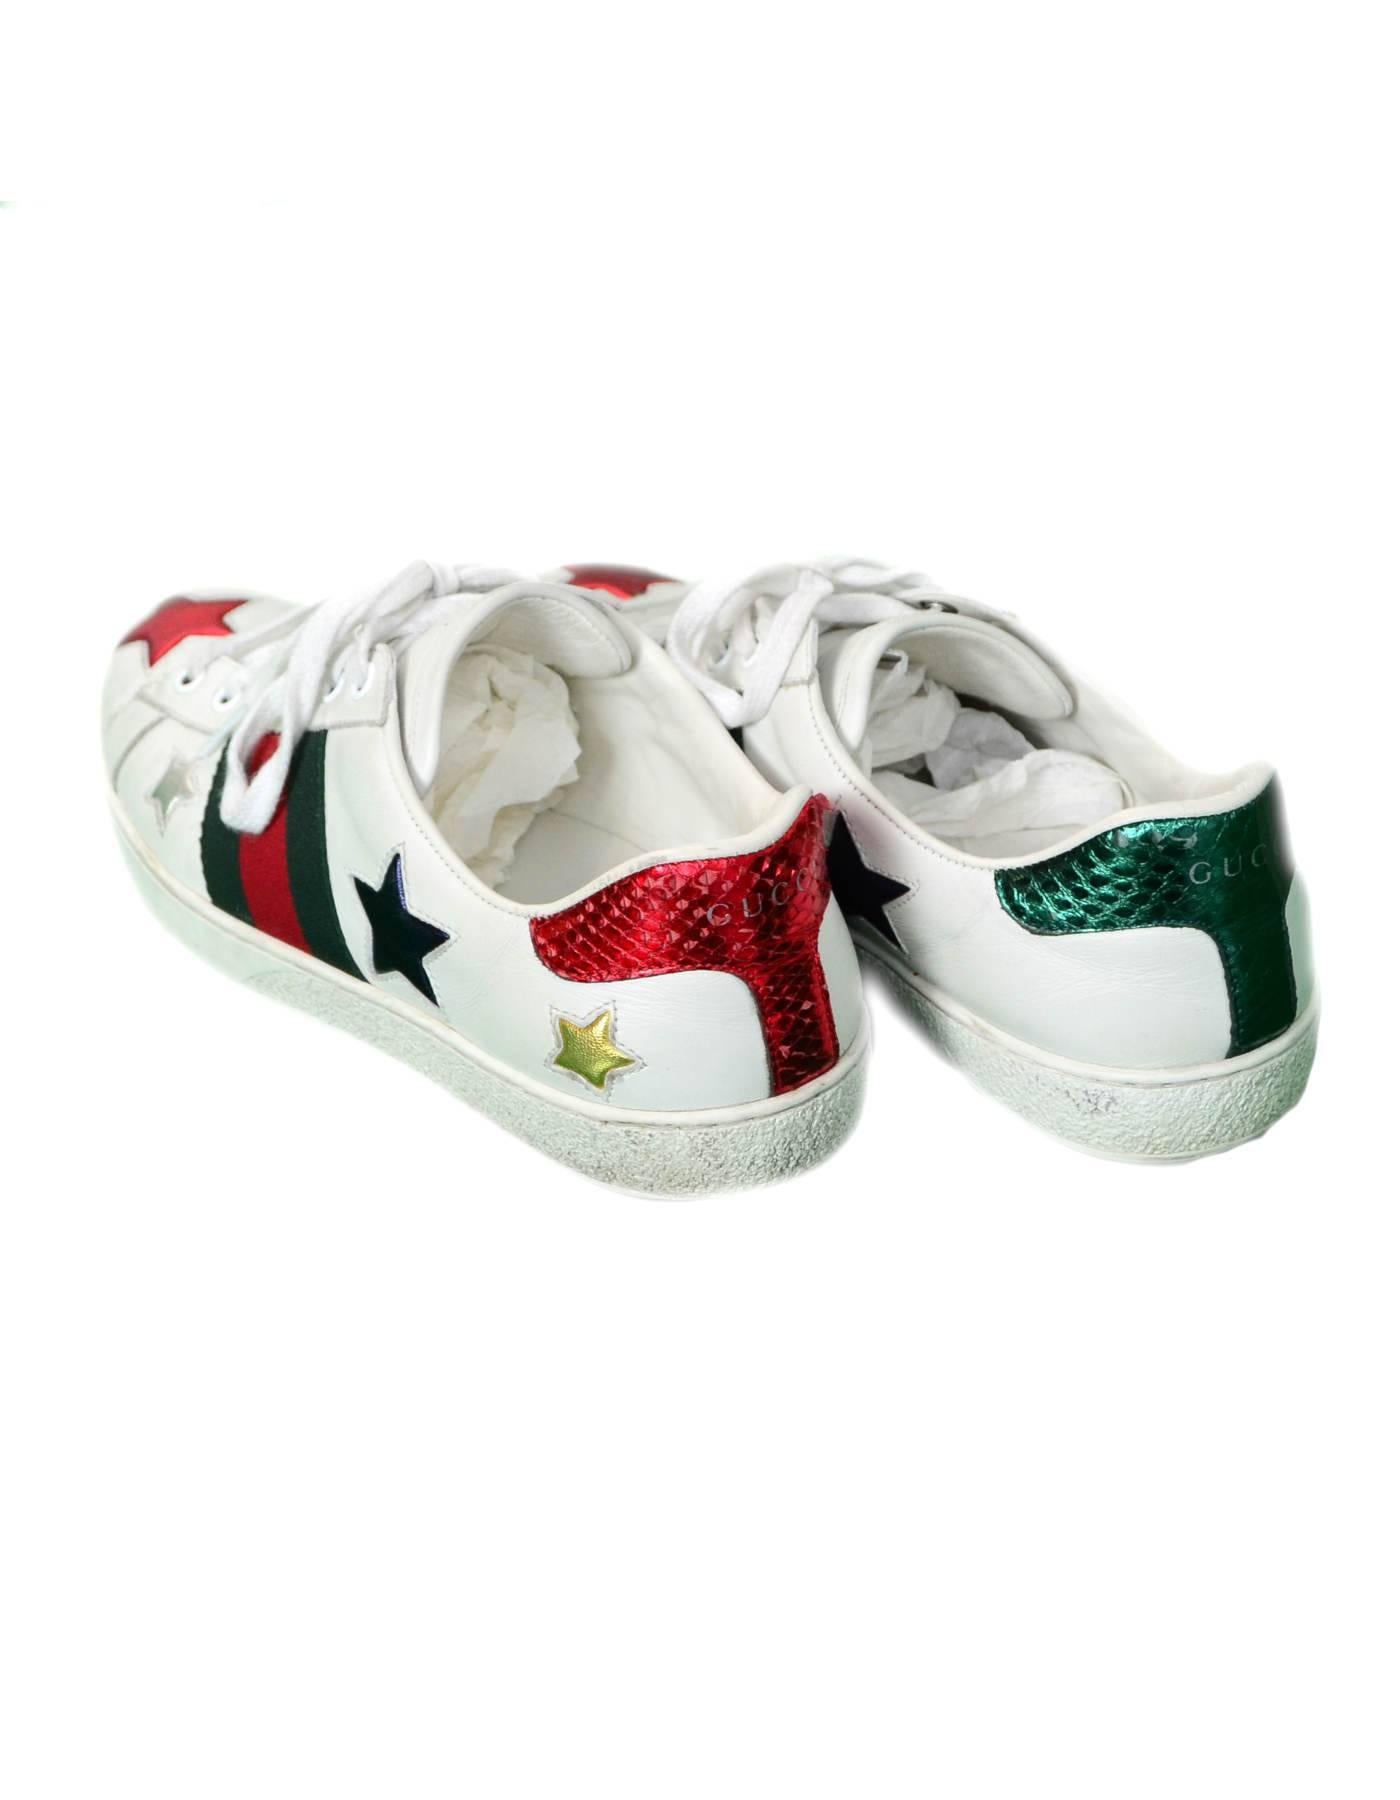 Gray Gucci Men's Ace White Leather & Metallic Star Sneakers Sz 7.5